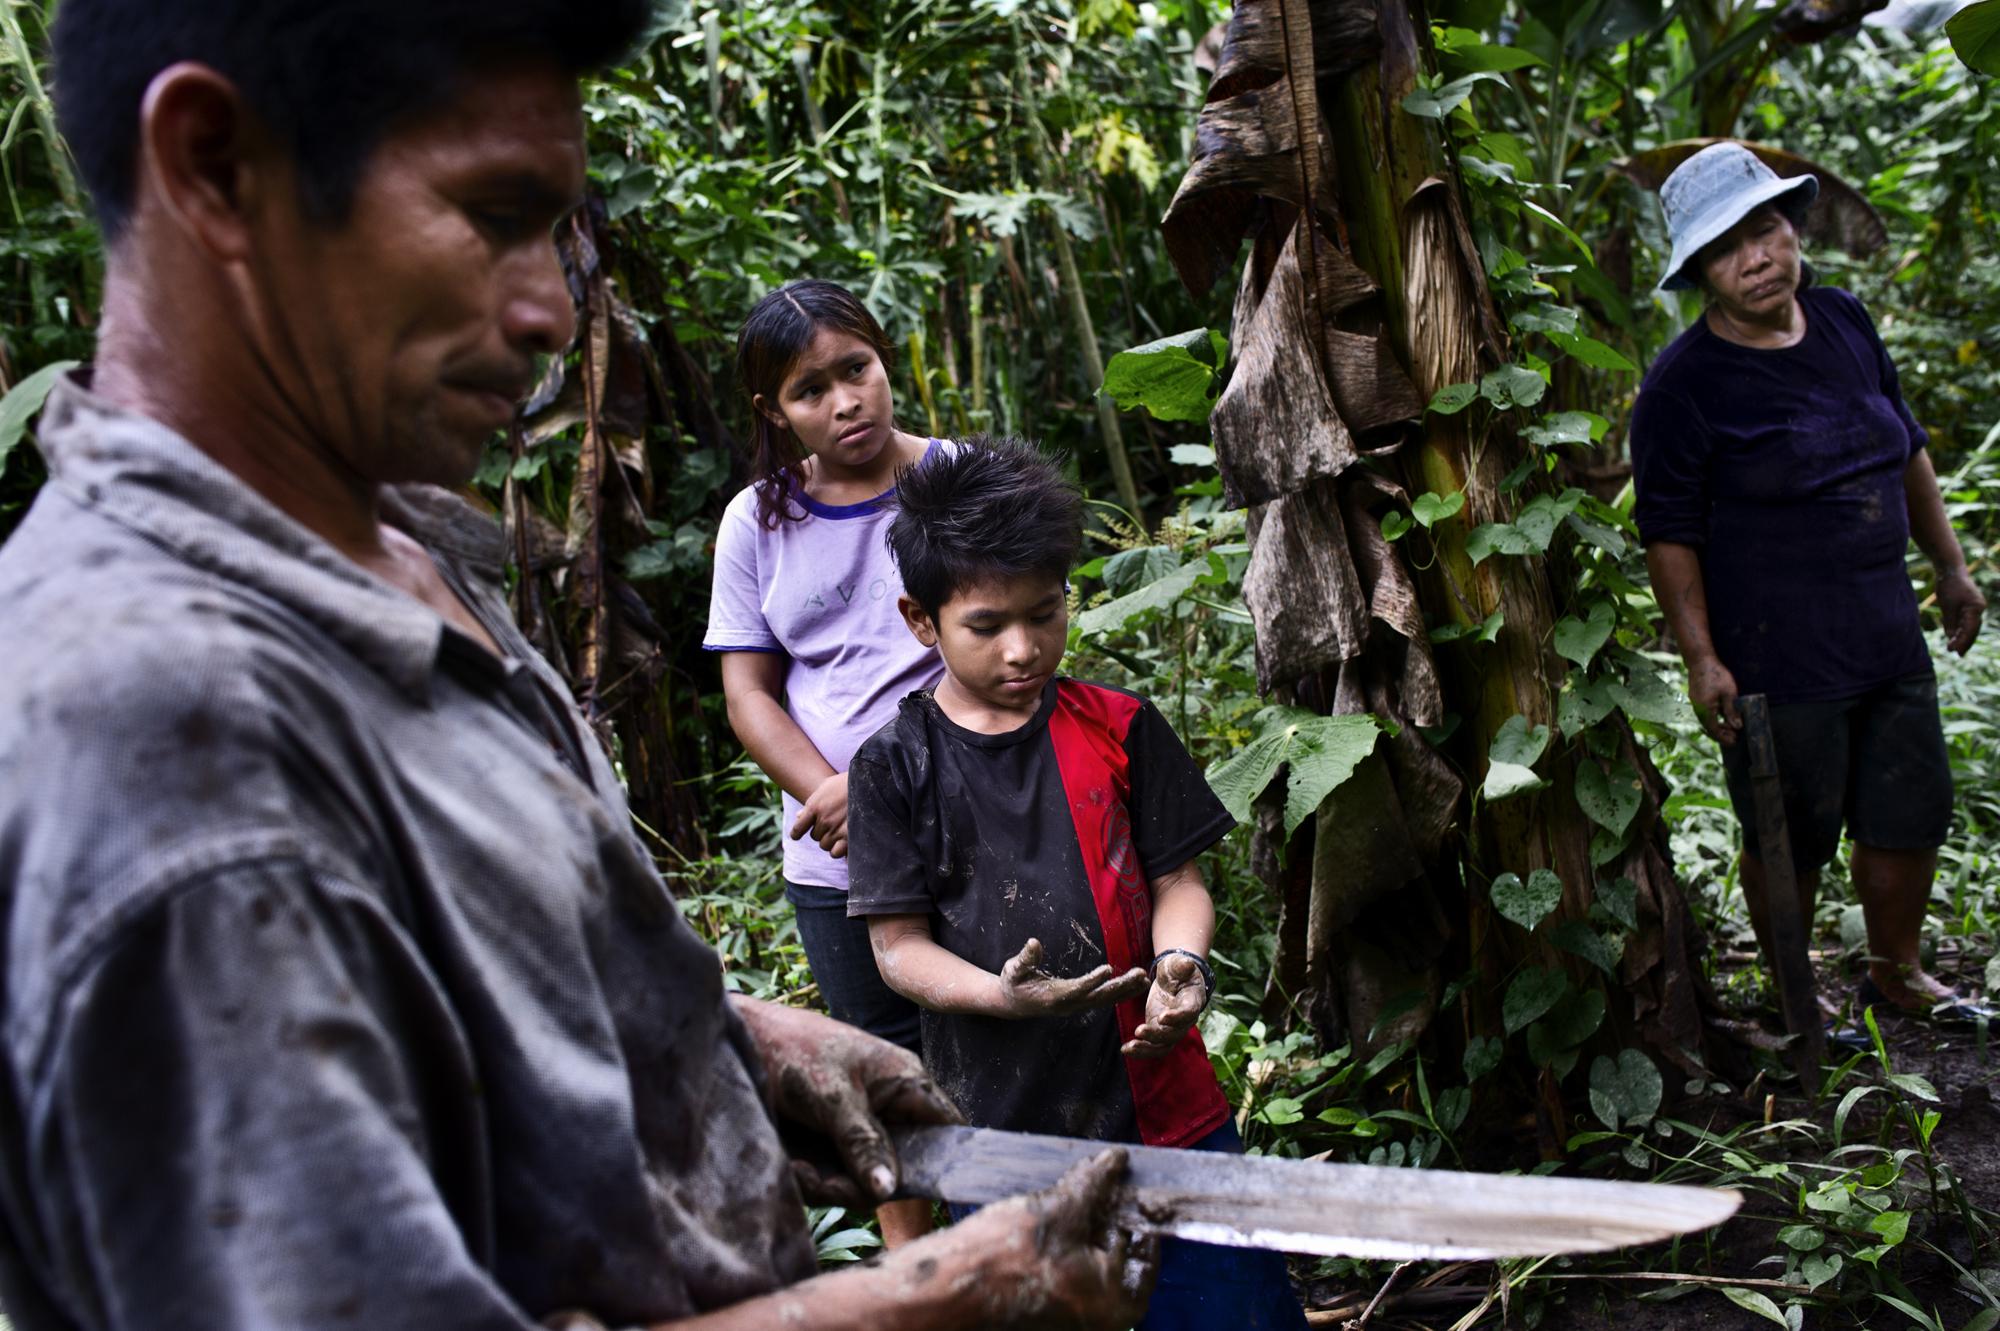 Food Justice - Bolivia, the Amazon, Valparaiso.
Ronald Valverde (9...